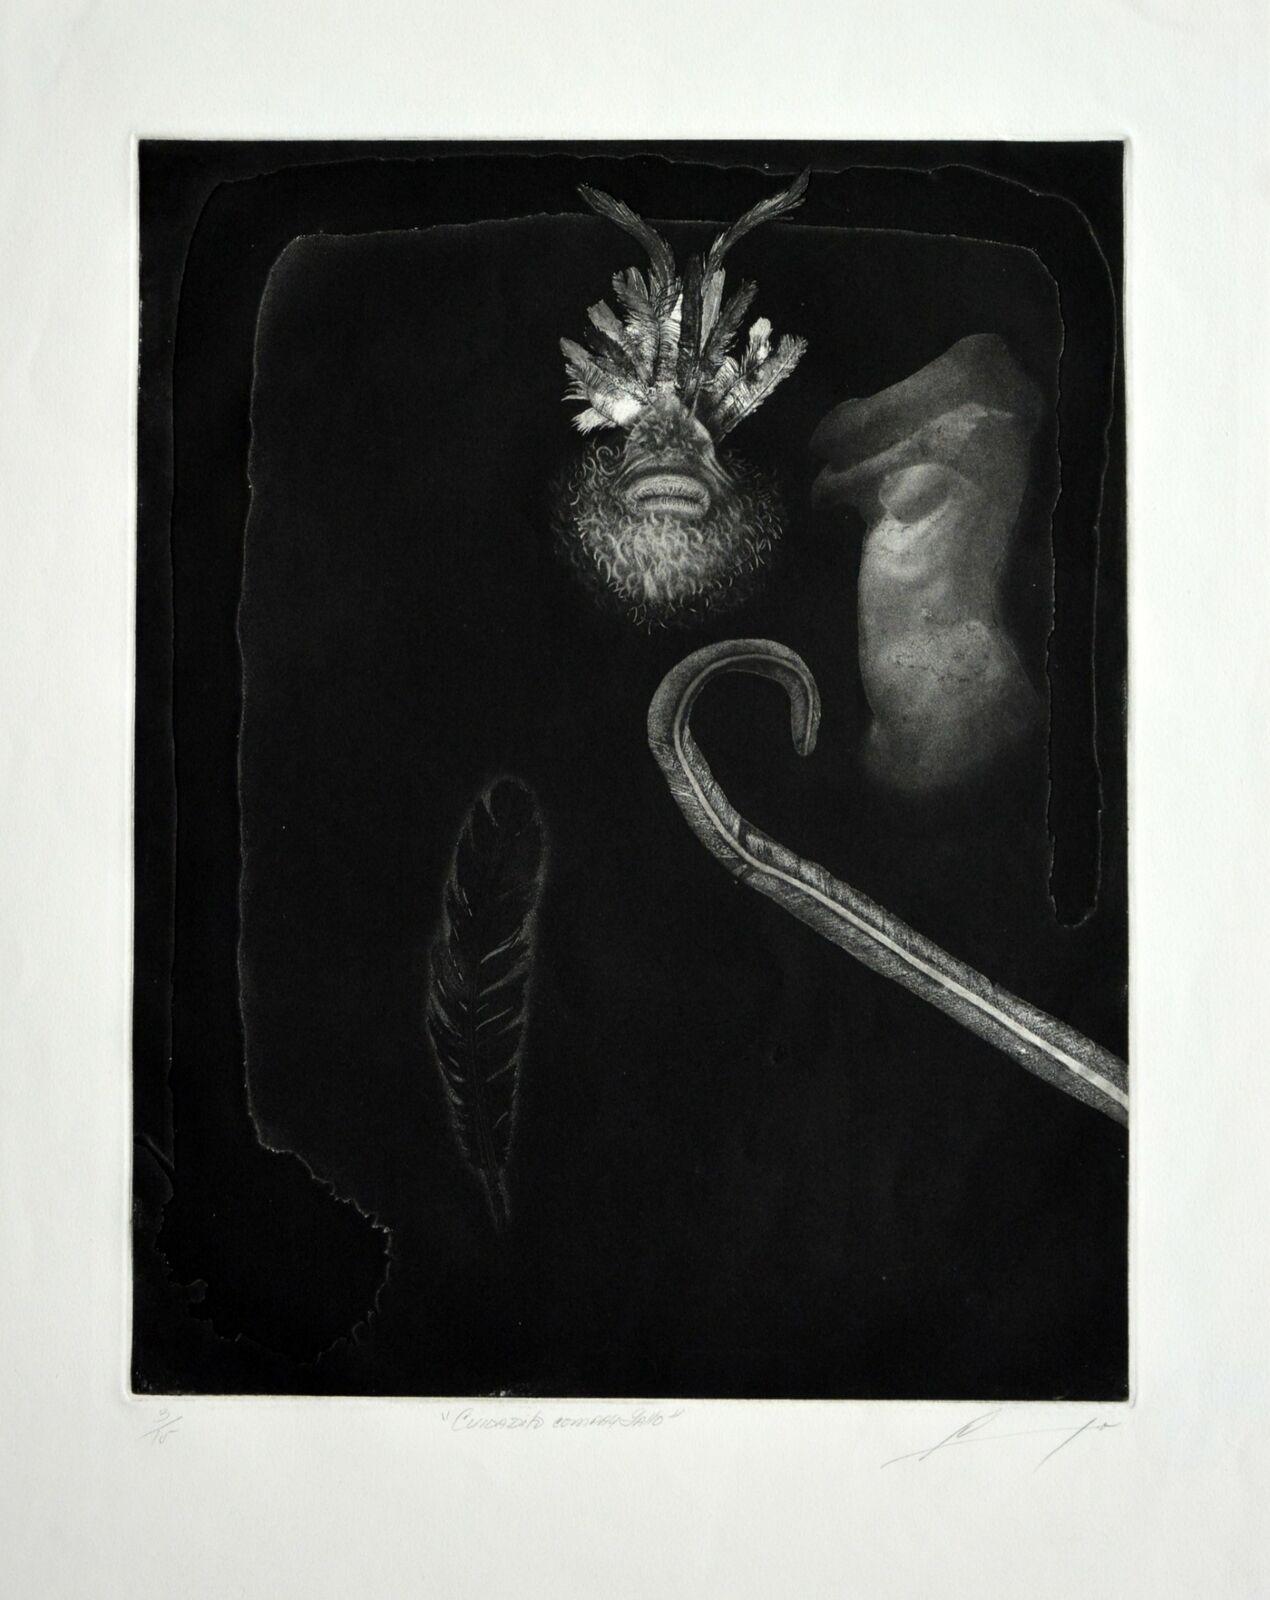 Luis Lara Figurative Print – Luis LARA, ¨Cuidadito compay gallo¨, 2000, Schabkunst, 25,2x20,1 in